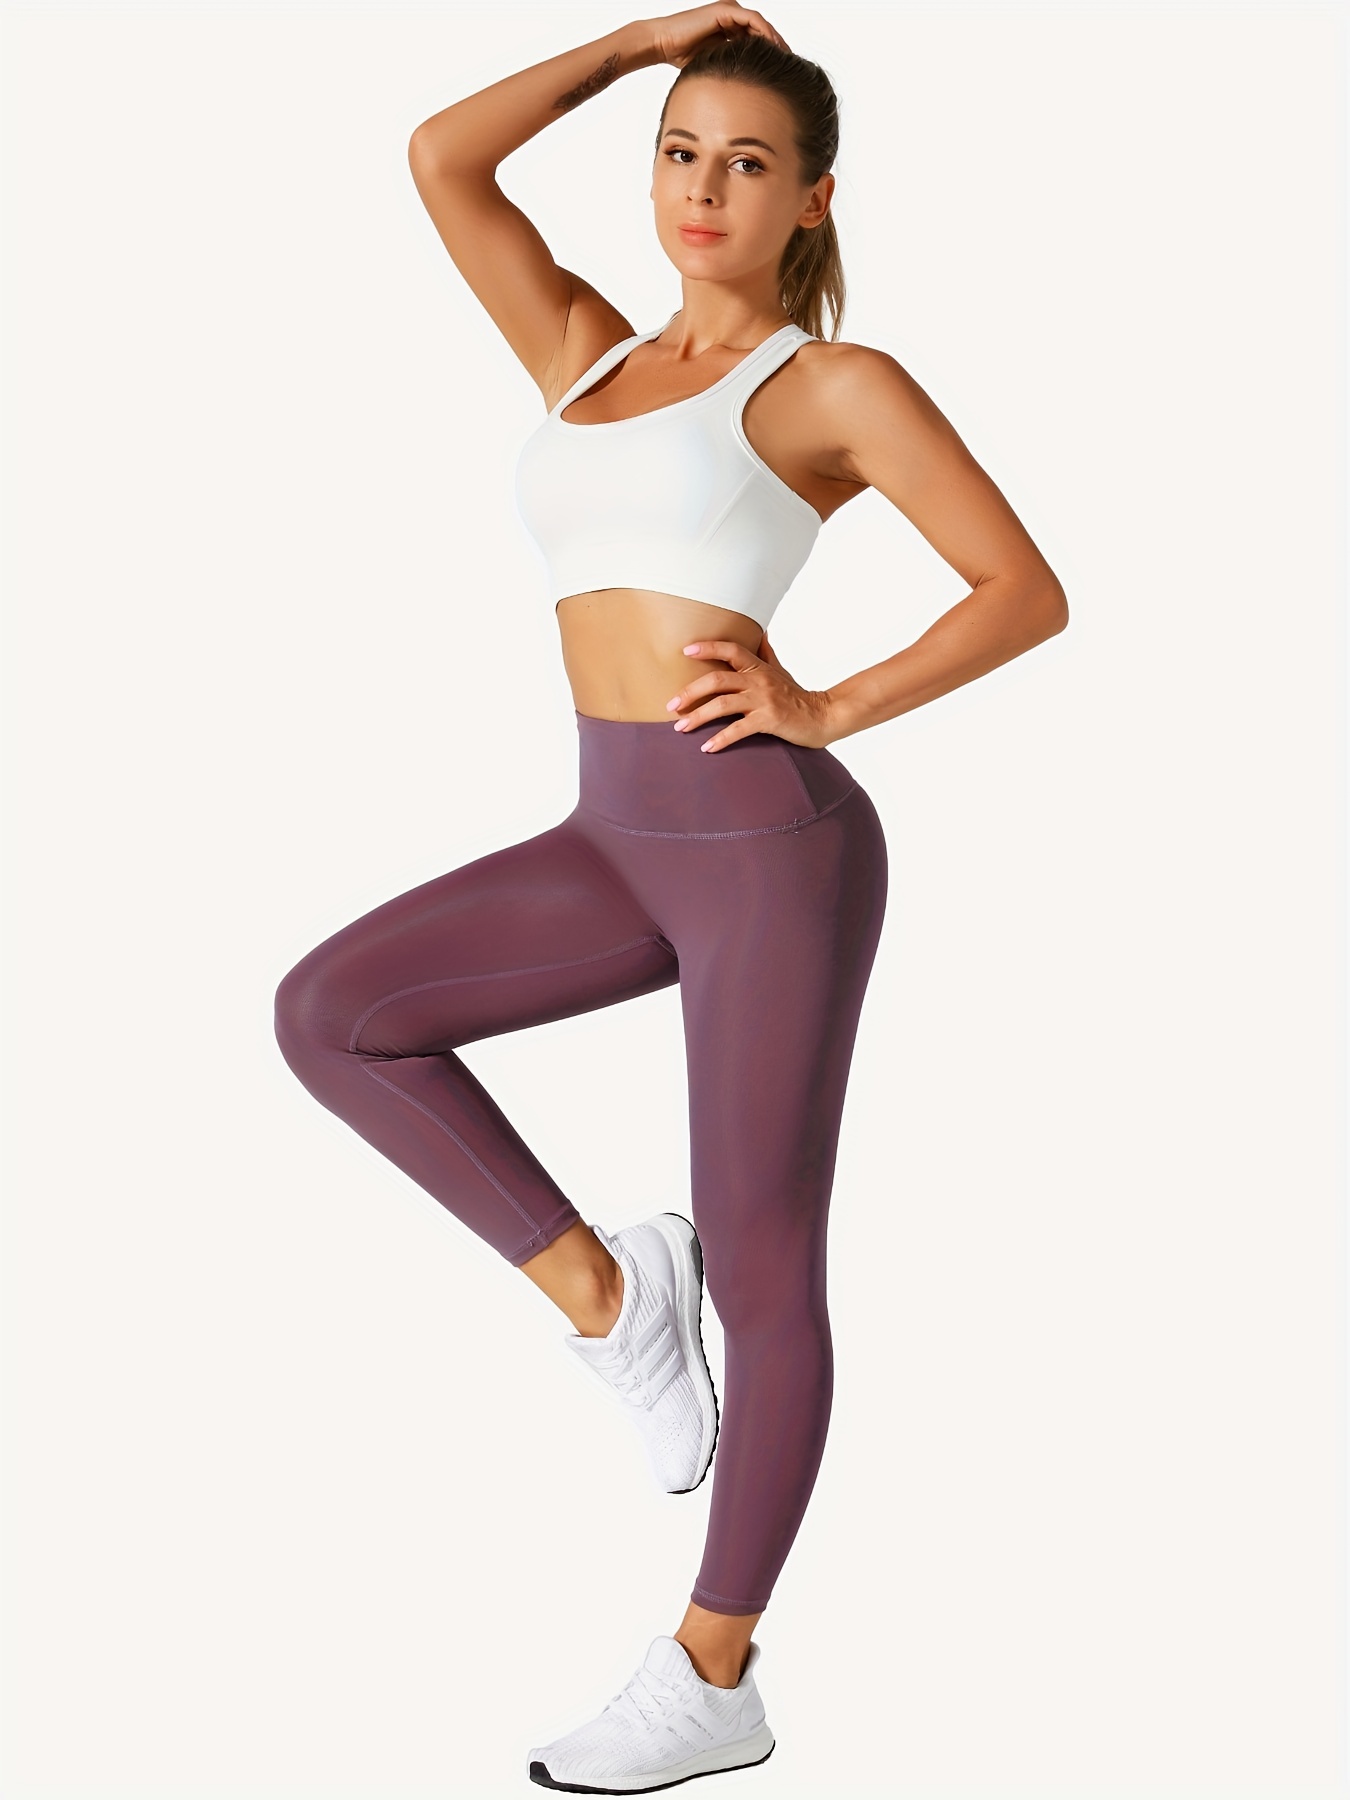 YUZEEHLA Workout Legging High Waist Cool Galaxy Graphic Printed Elastic  Butt Lifting Yoga Pants for Women Teens Girls Sports X-Large